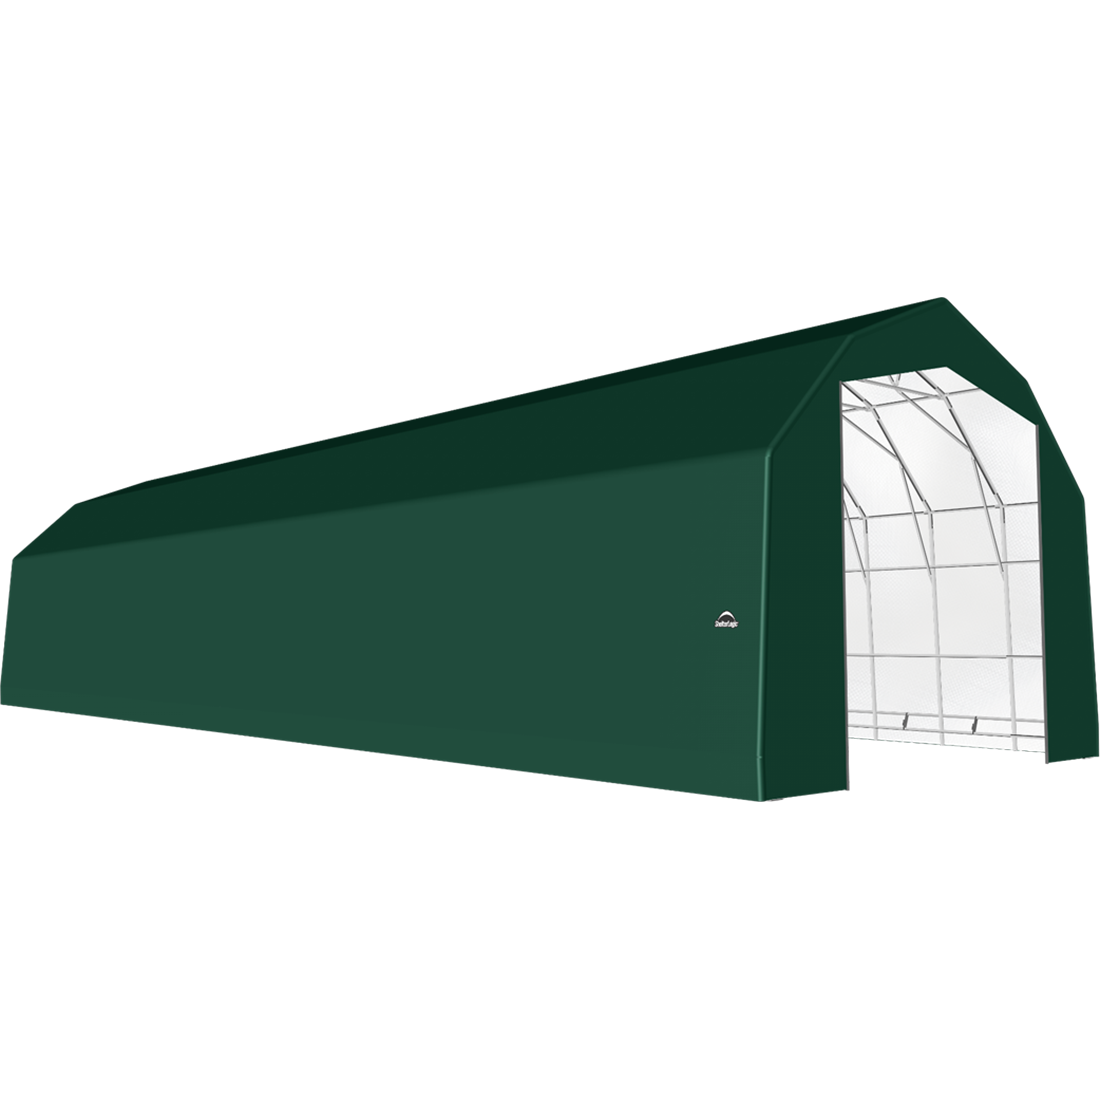 ShelterTech SP Series Barn Shelter, 25 ft. x 76 ft. x 20 ft. Heavy Duty PVC 14.5 oz. Green